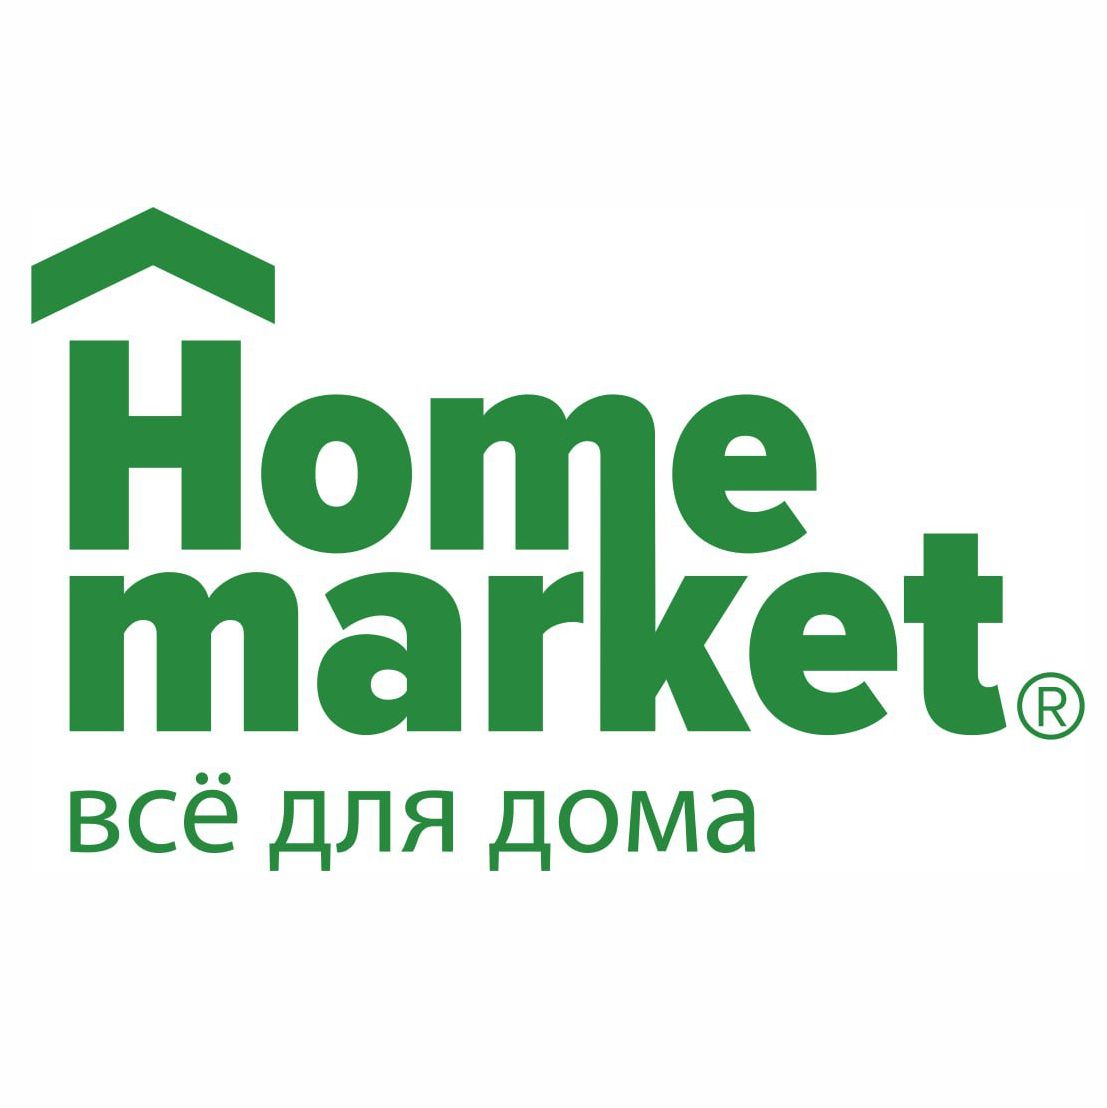 Home market. Школьный базар 